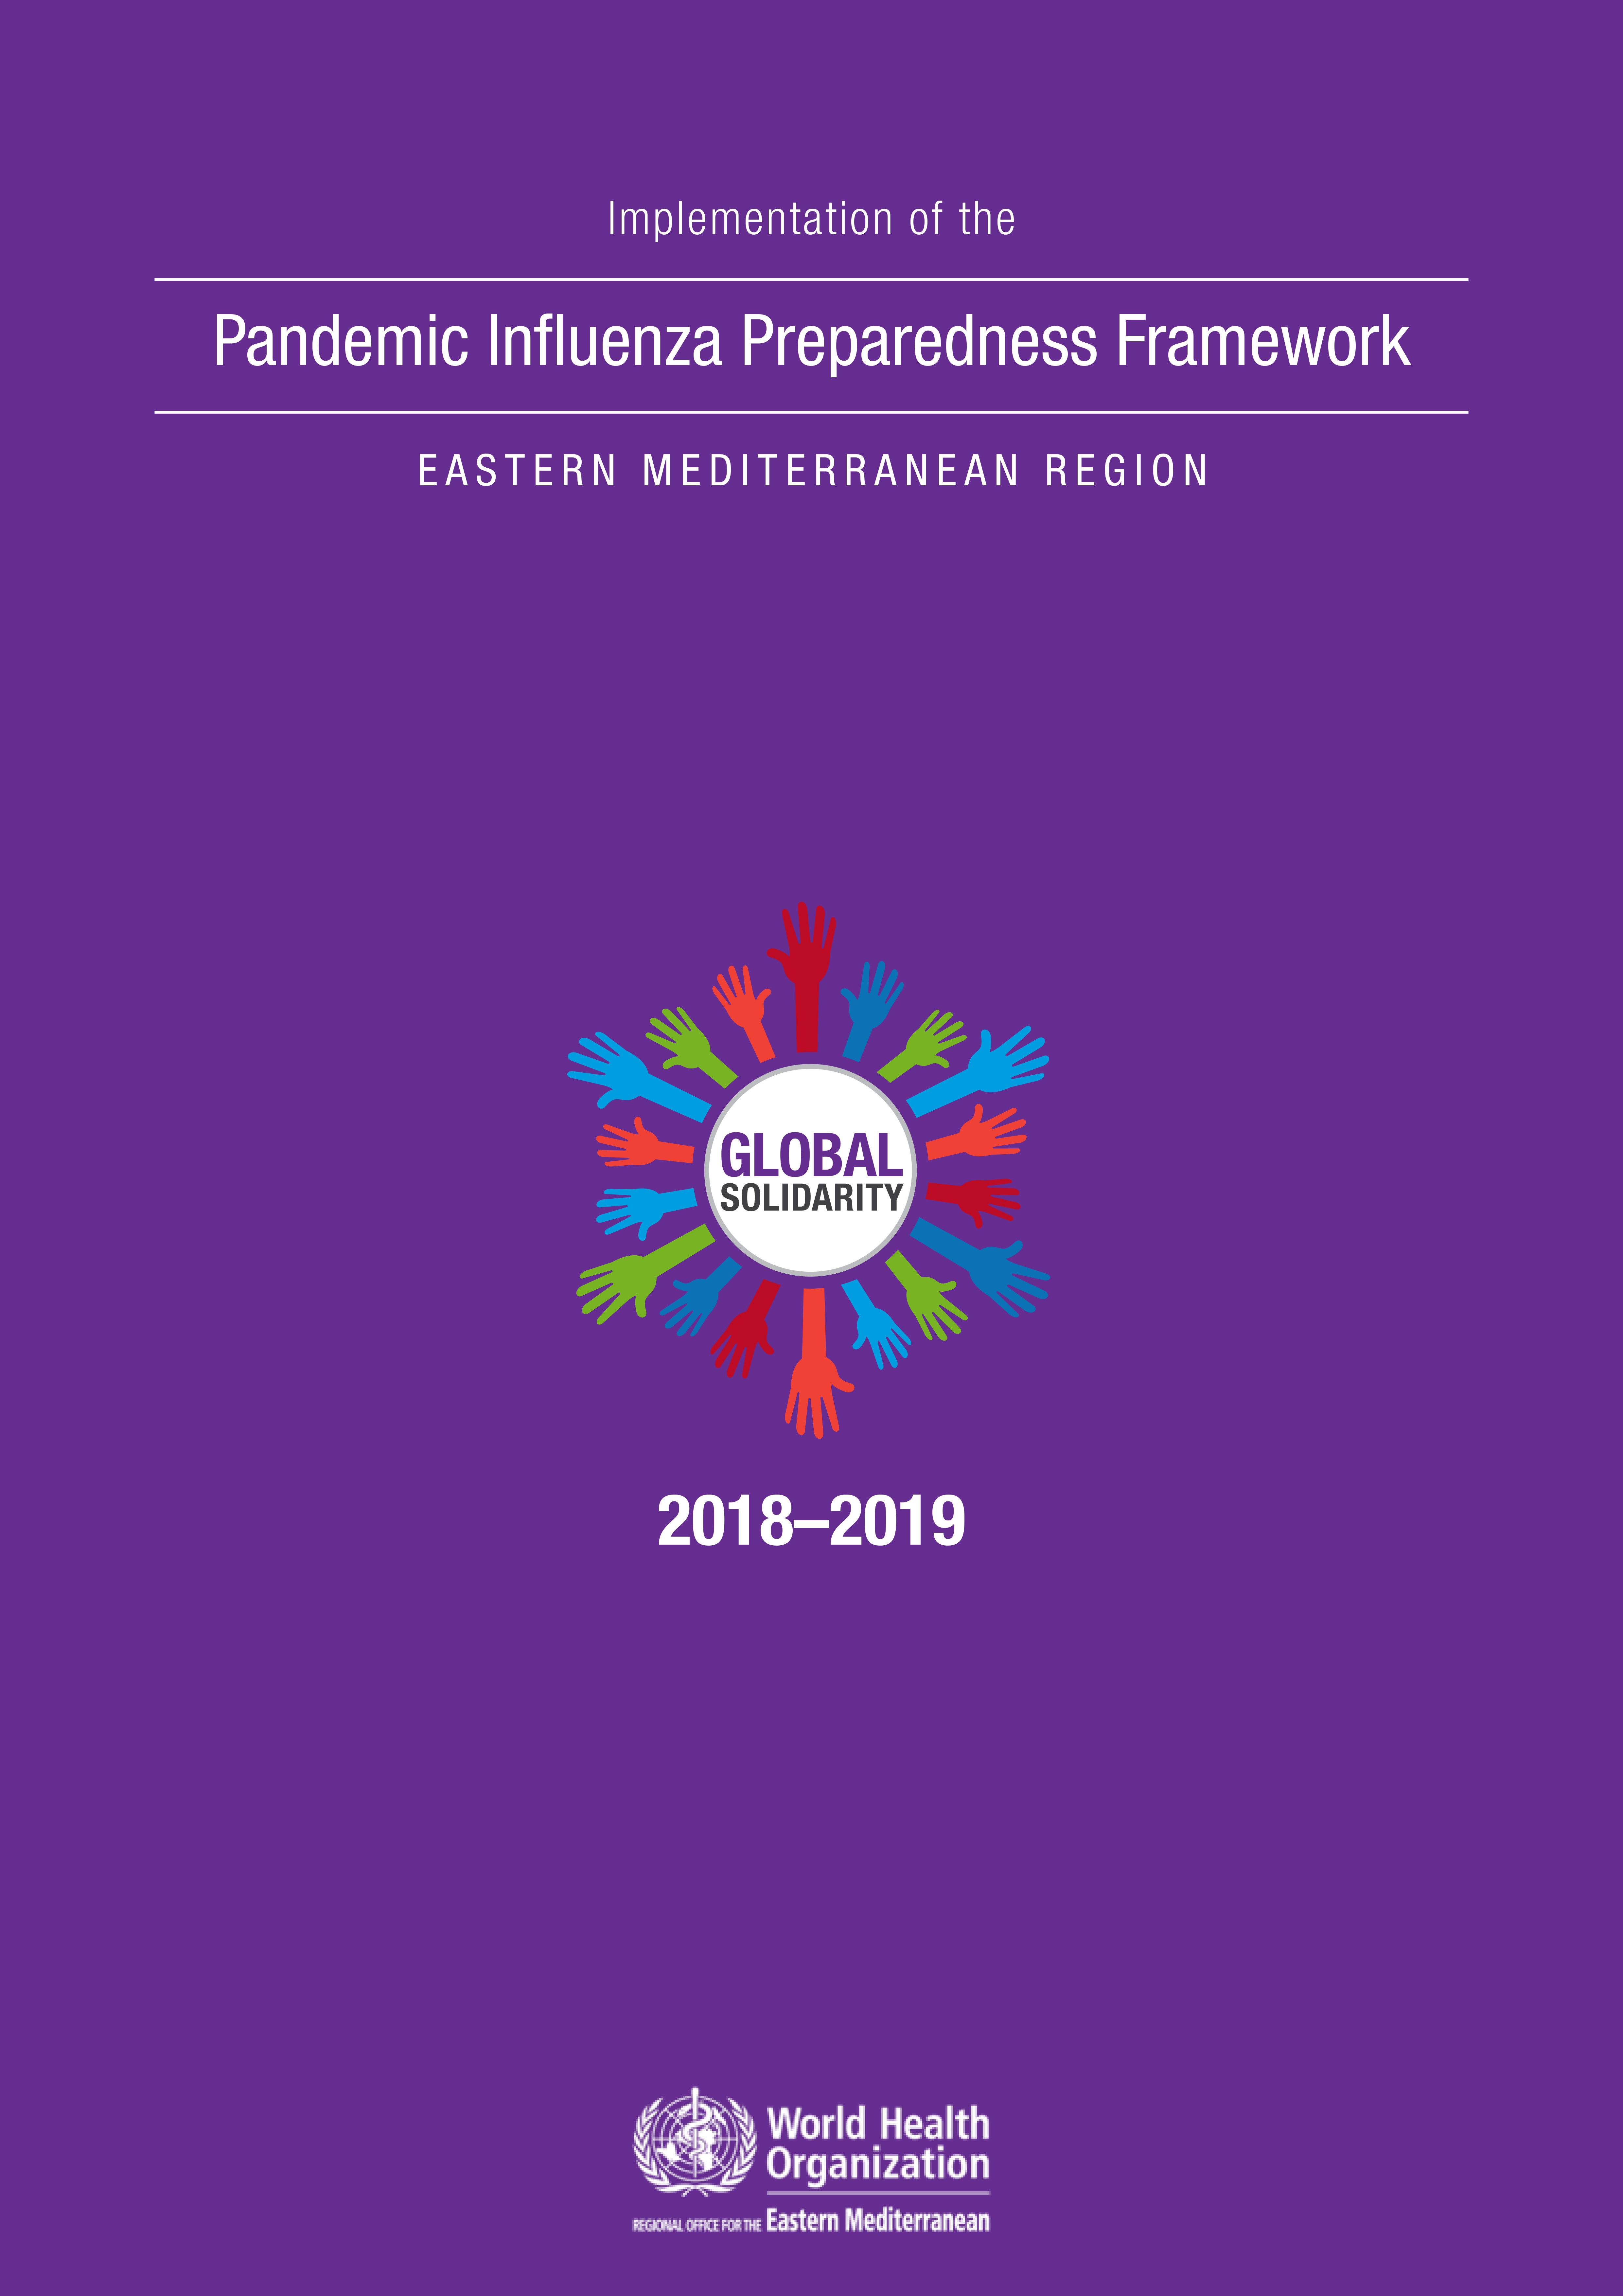 Implementation of the pandemic influenza preparedness framework: Eastern Mediterranean Region, 2018-2019